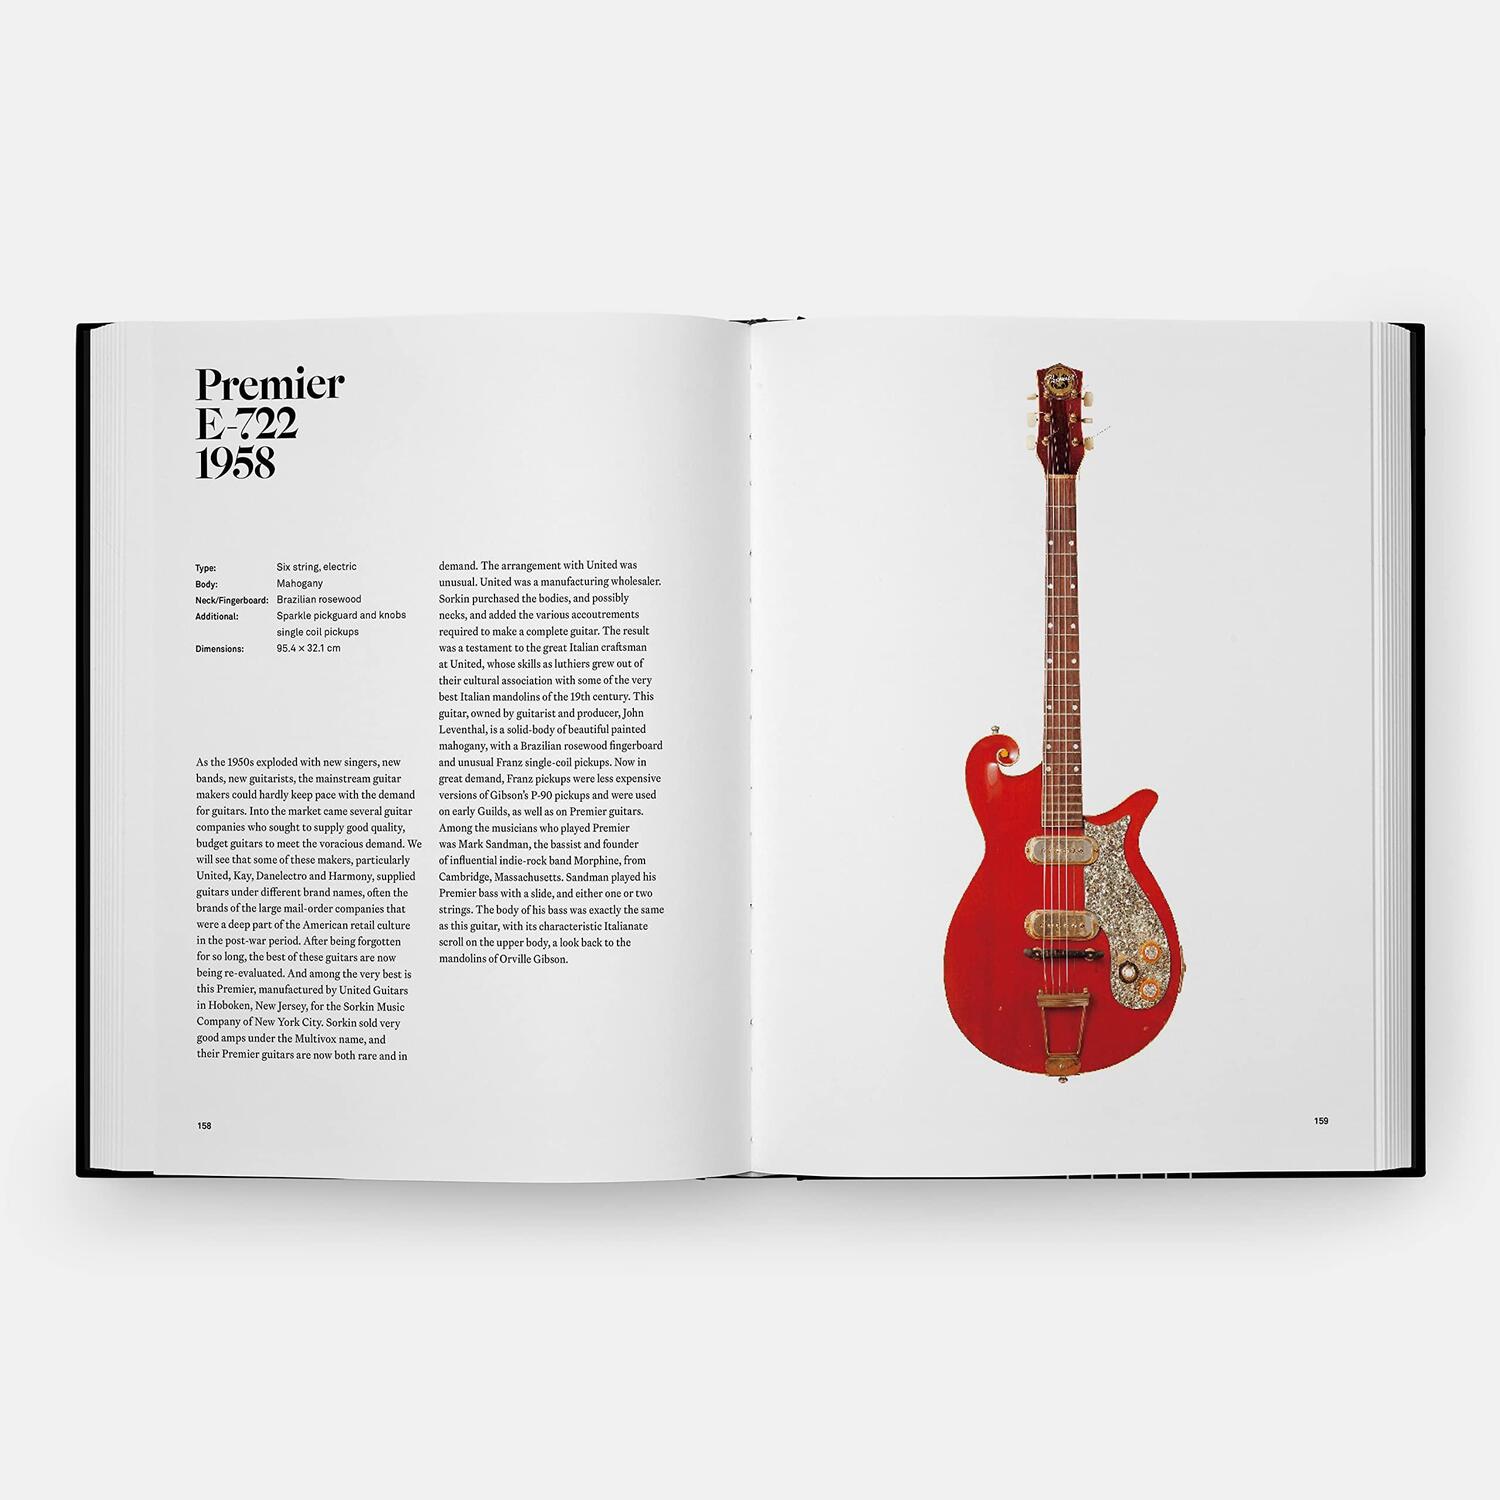 Bild: 9781838665586 | Guitar | The Shape of Sound, 100 Iconic Designs | Ultan Guilfoyle